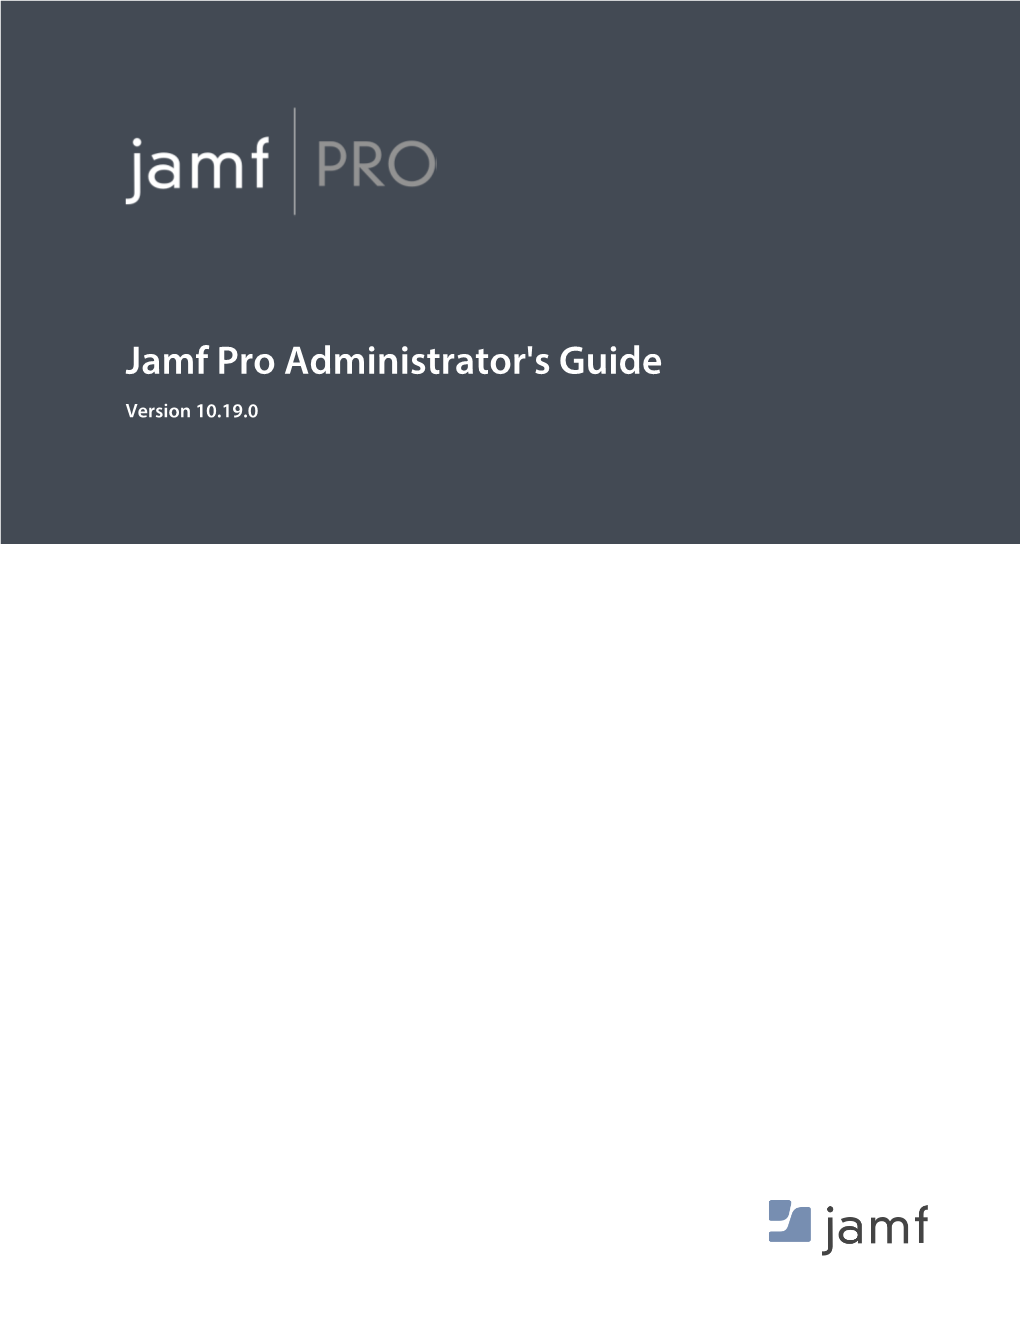 Jamf Pro Administrator's Guide Version 10.19.0 © Copyright 2002-2020 Jamf